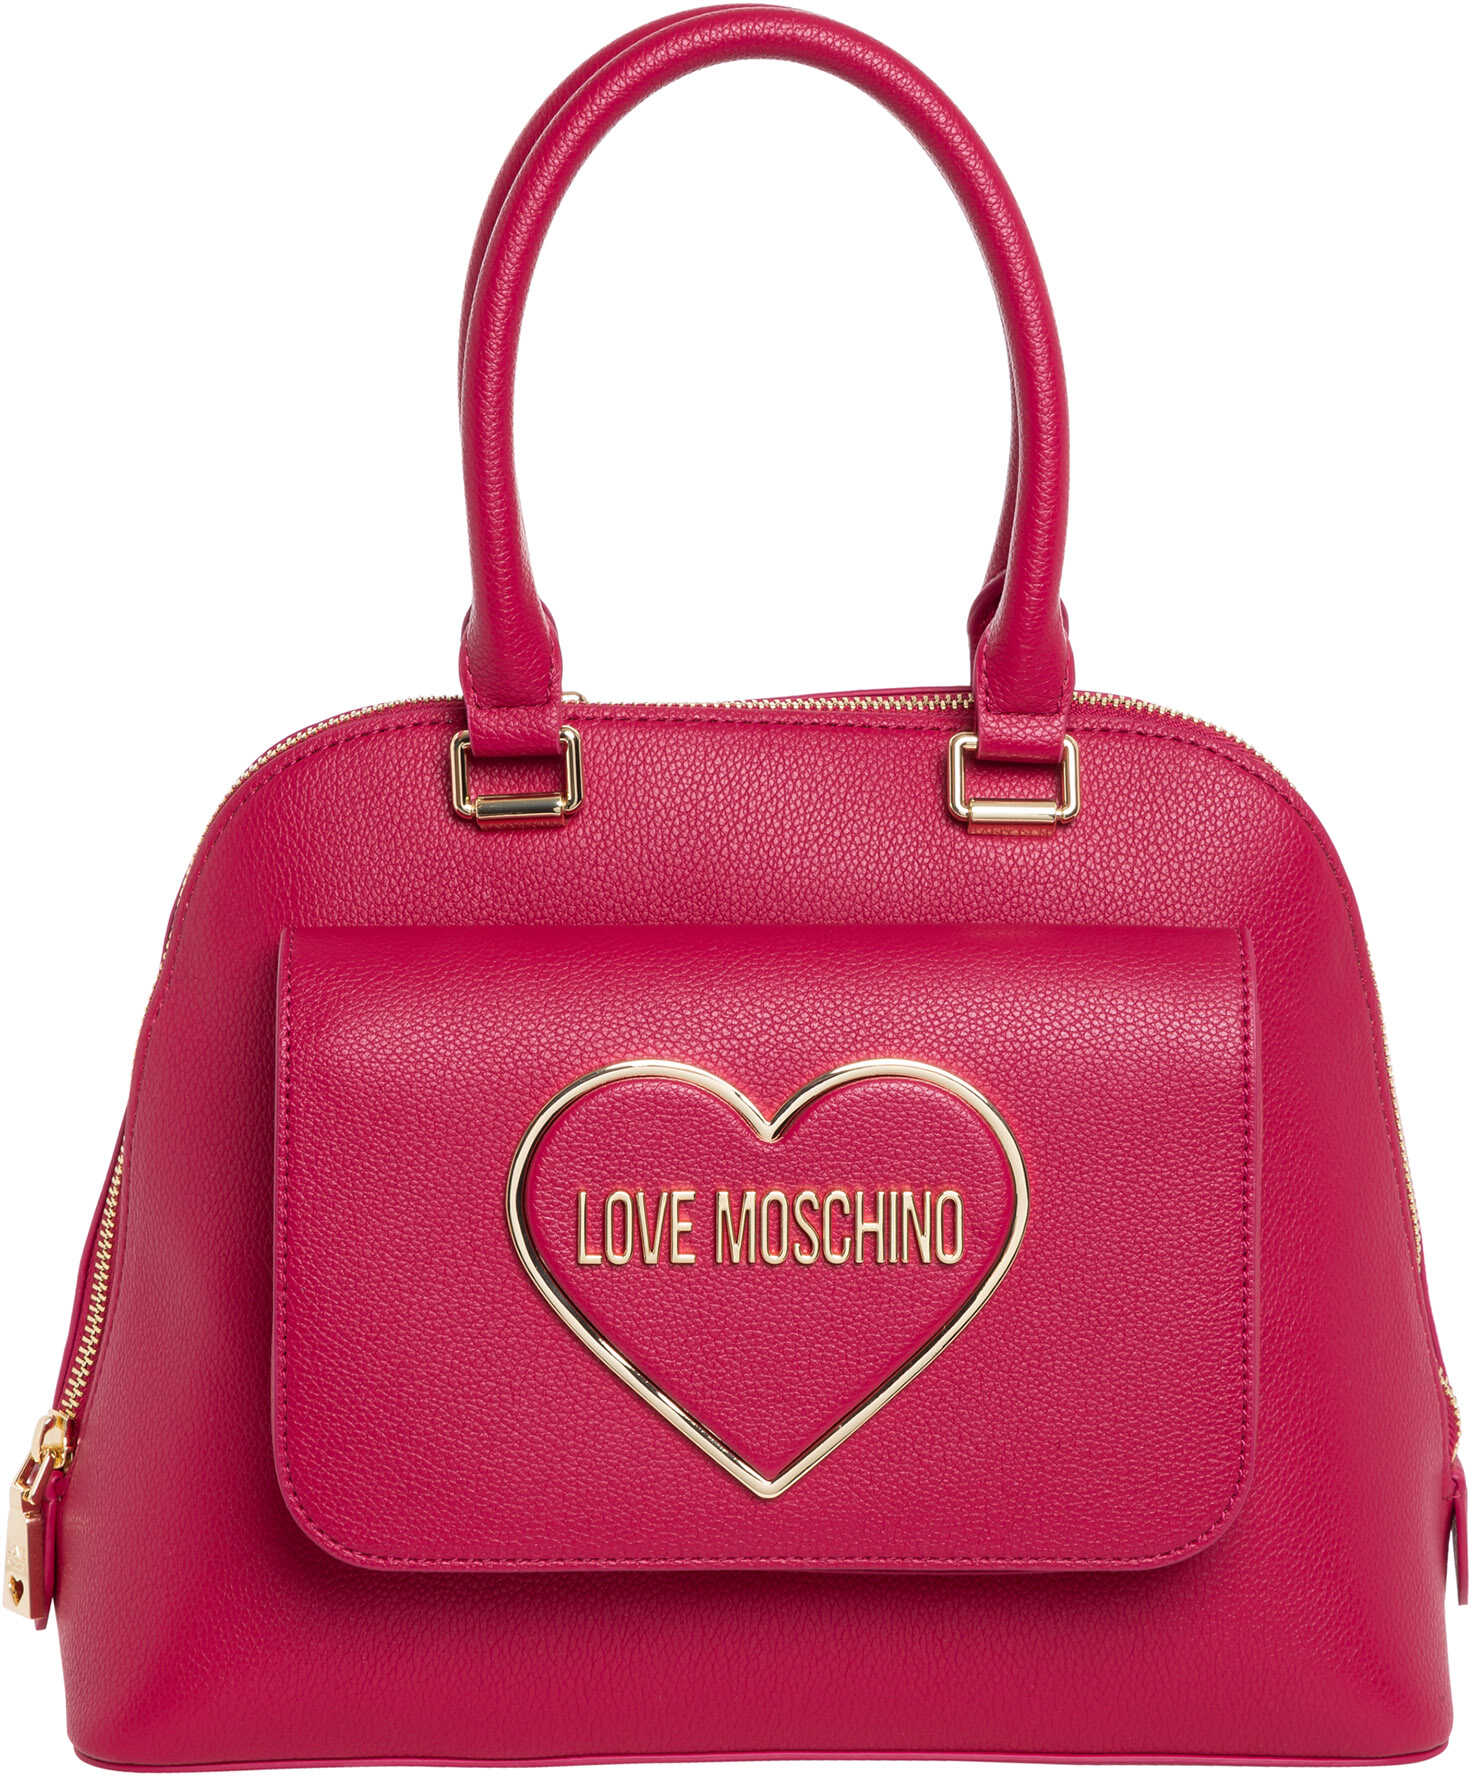 LOVE Moschino Handbag Pink image2